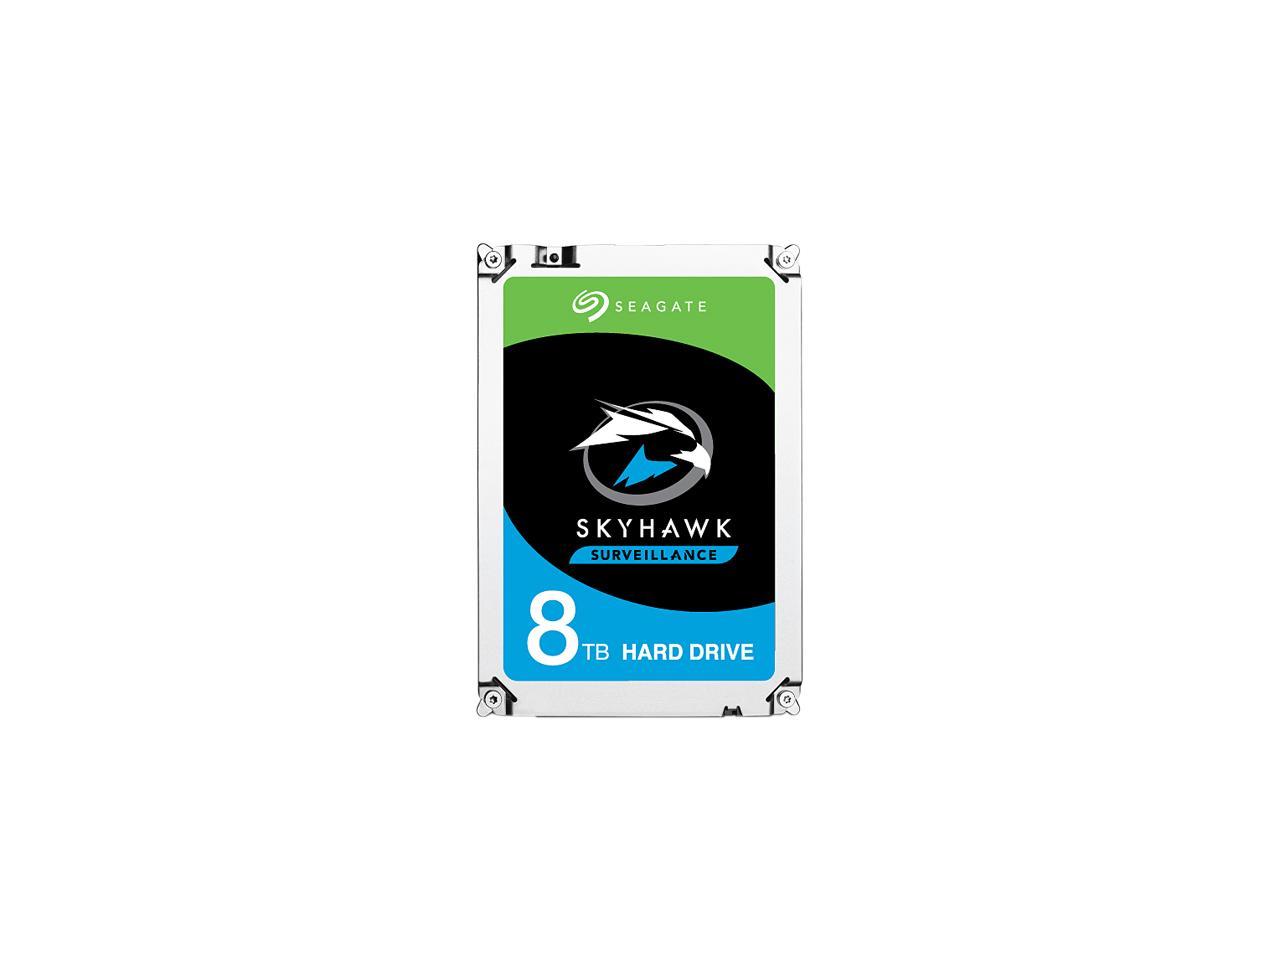 Seagate SkyHawk 8TB Surveillance Hard Drive 256MB Cache SATA 6.0Gb/s 3.5" Internal Hard Drive ST8000VX0022